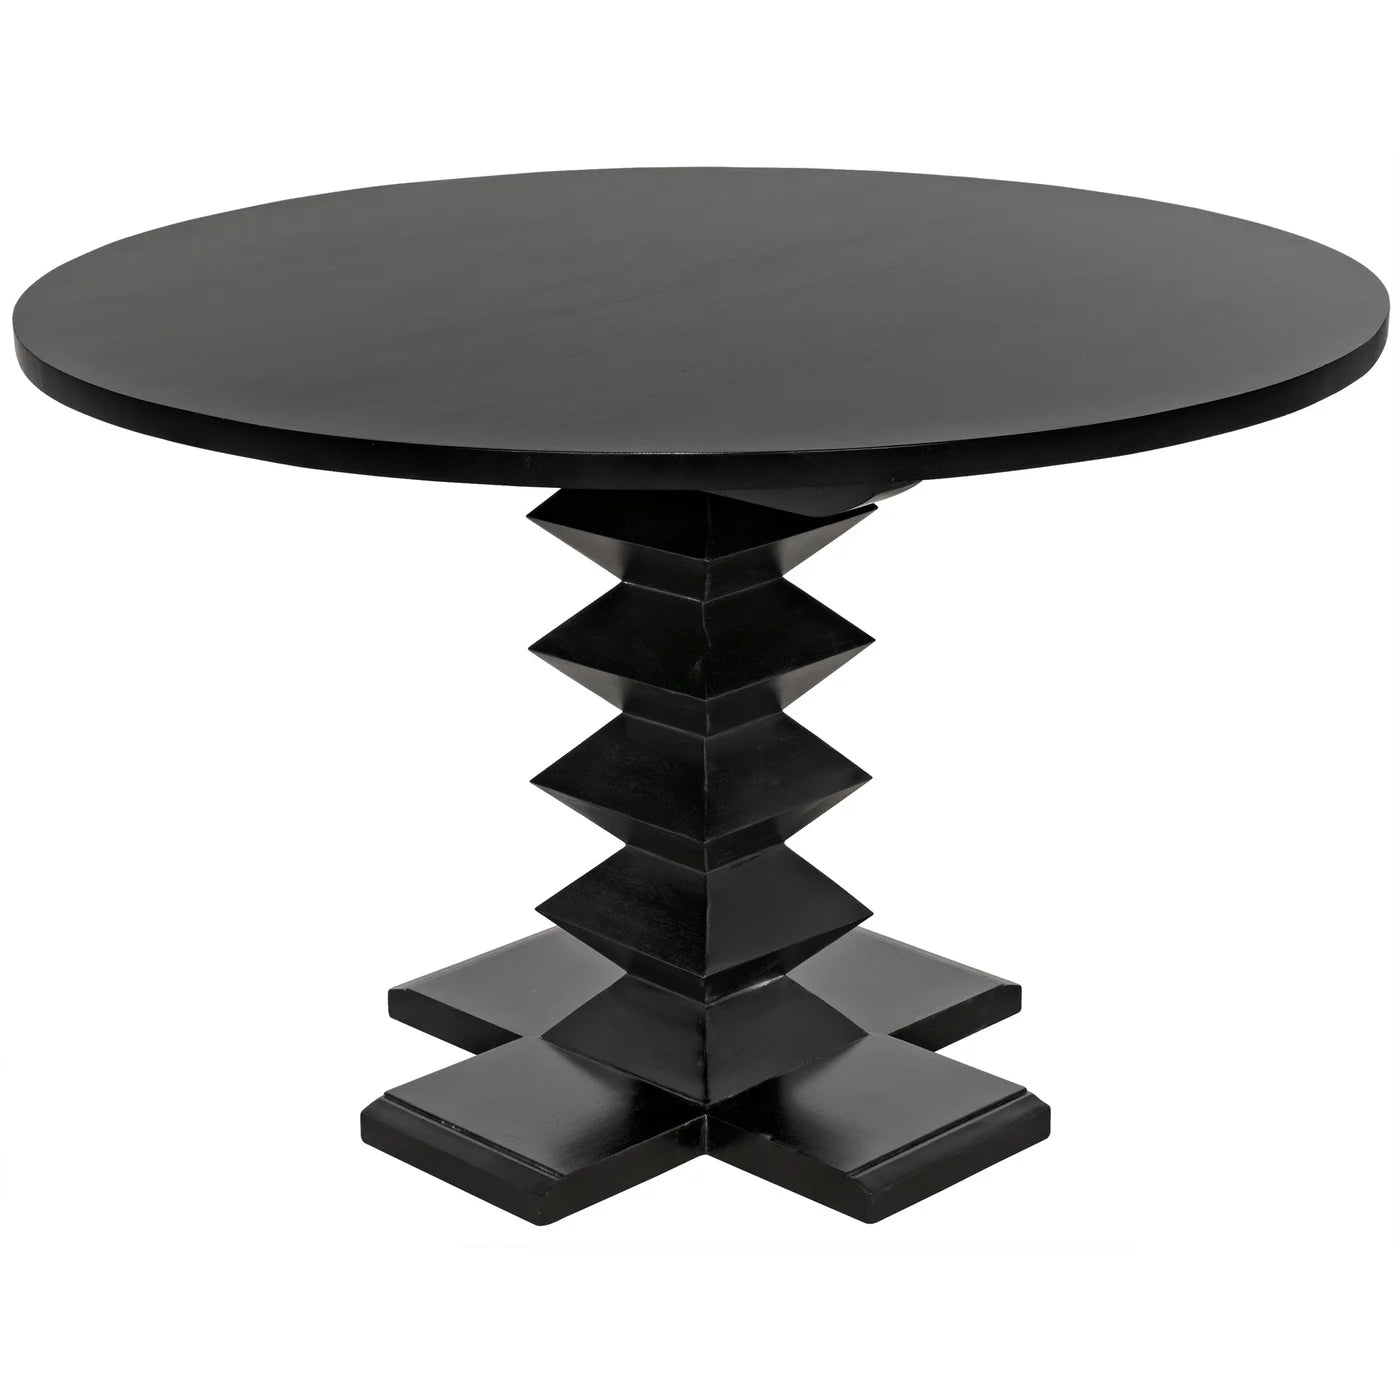 Noir dining table designer discount